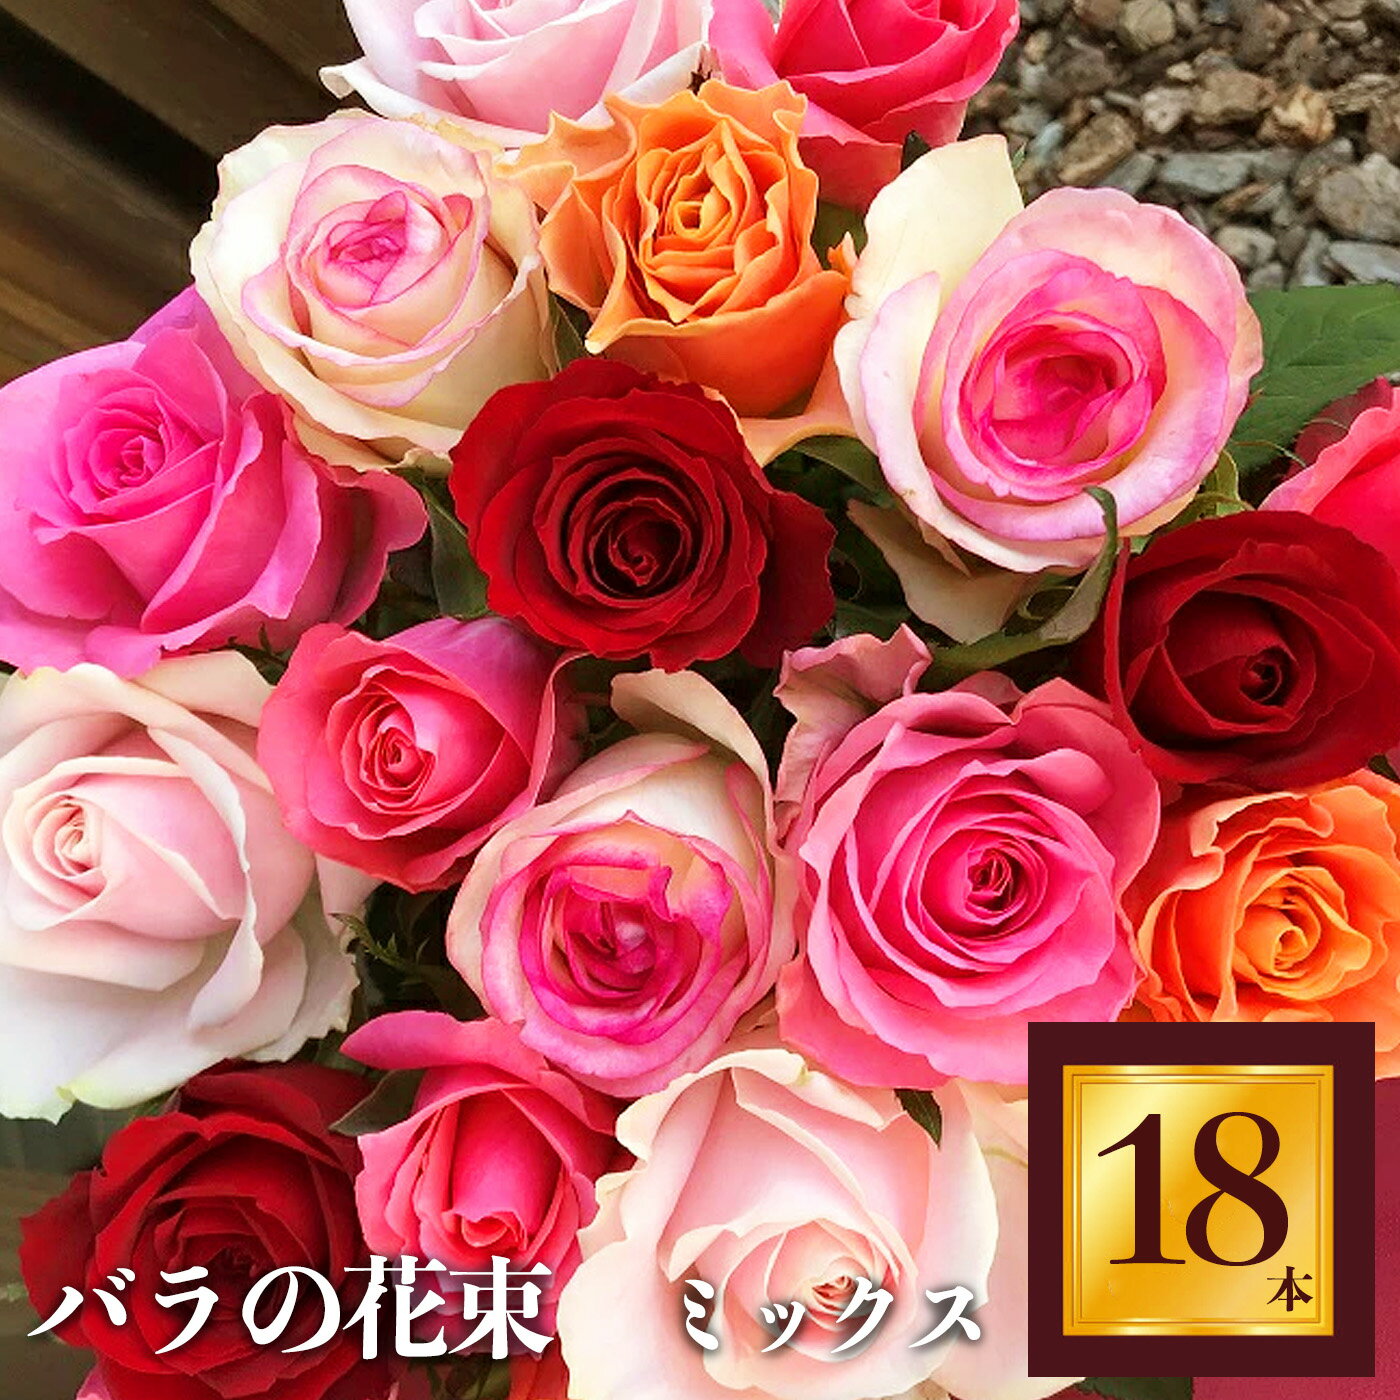 Heguri Rose バラの花束(18本)ローズ フラワー 新鮮 高品質 豪華 綺麗 平群のバラ 花束 平群ブランド 誕生日 記念日 お祝い